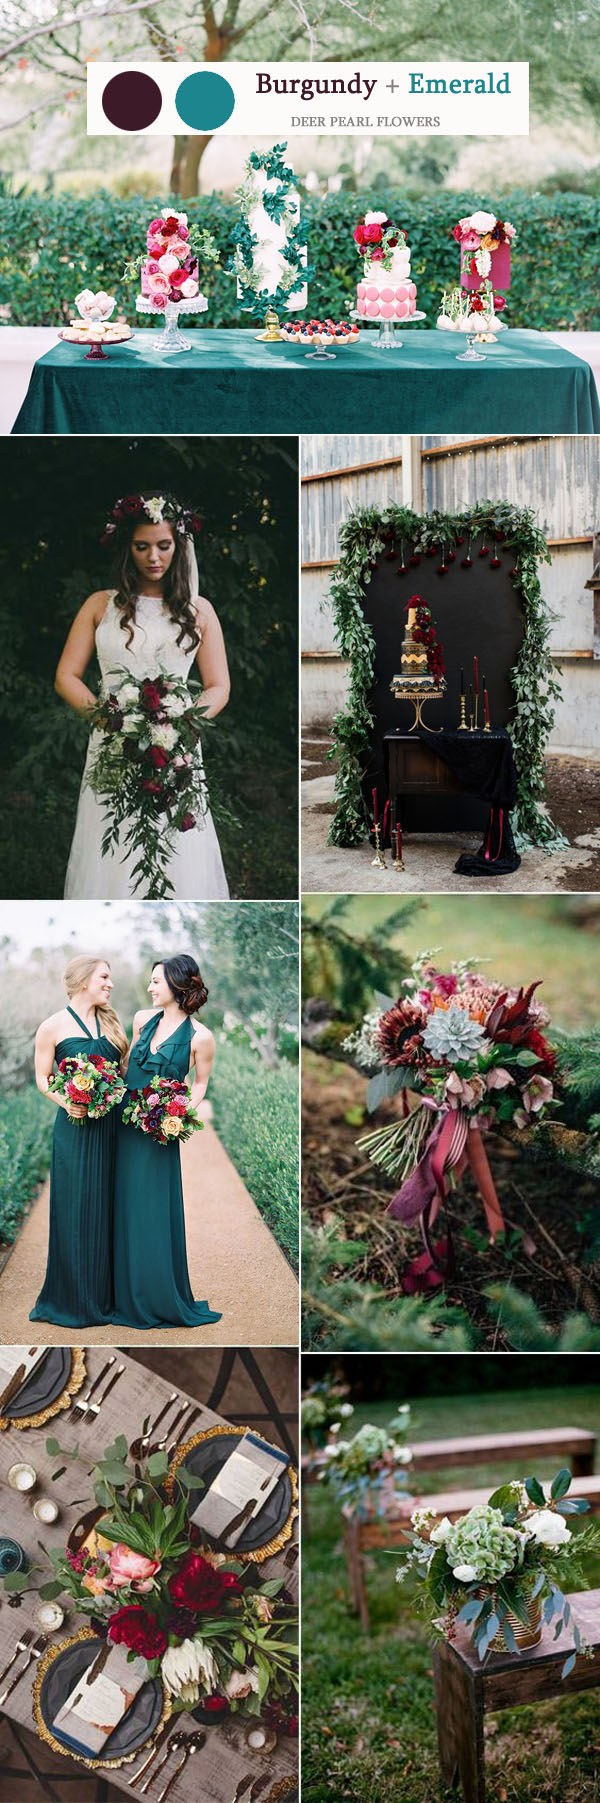 Burgundy and emerald wedding color ideas